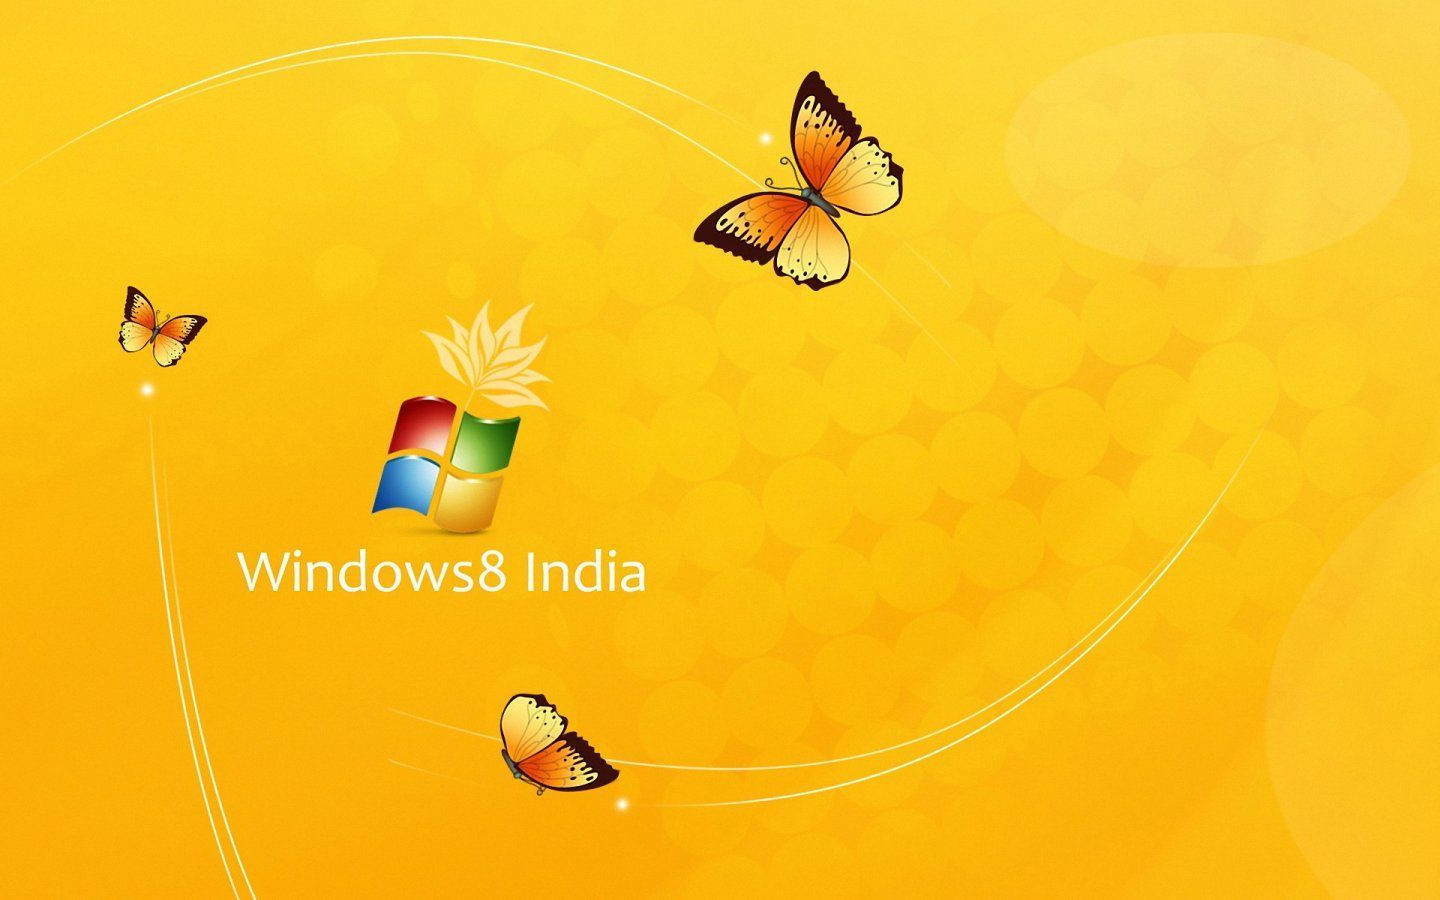 Windows 8 HD Wallpaper 1440x900 Wallpapers, 1440x900 Wallpapers ...